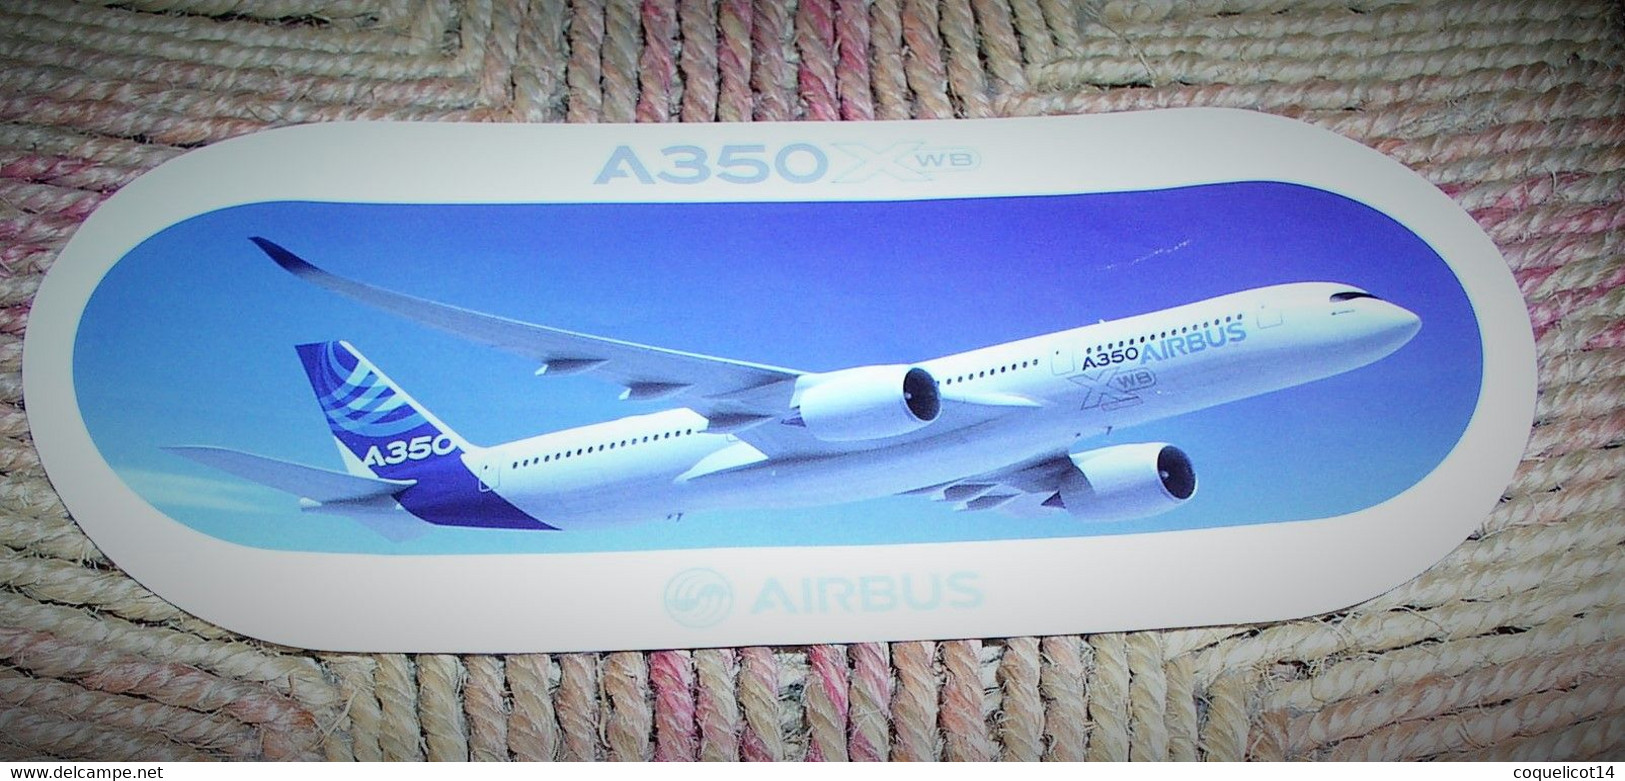 Autocollant Airbus A350 XWB - Stickers